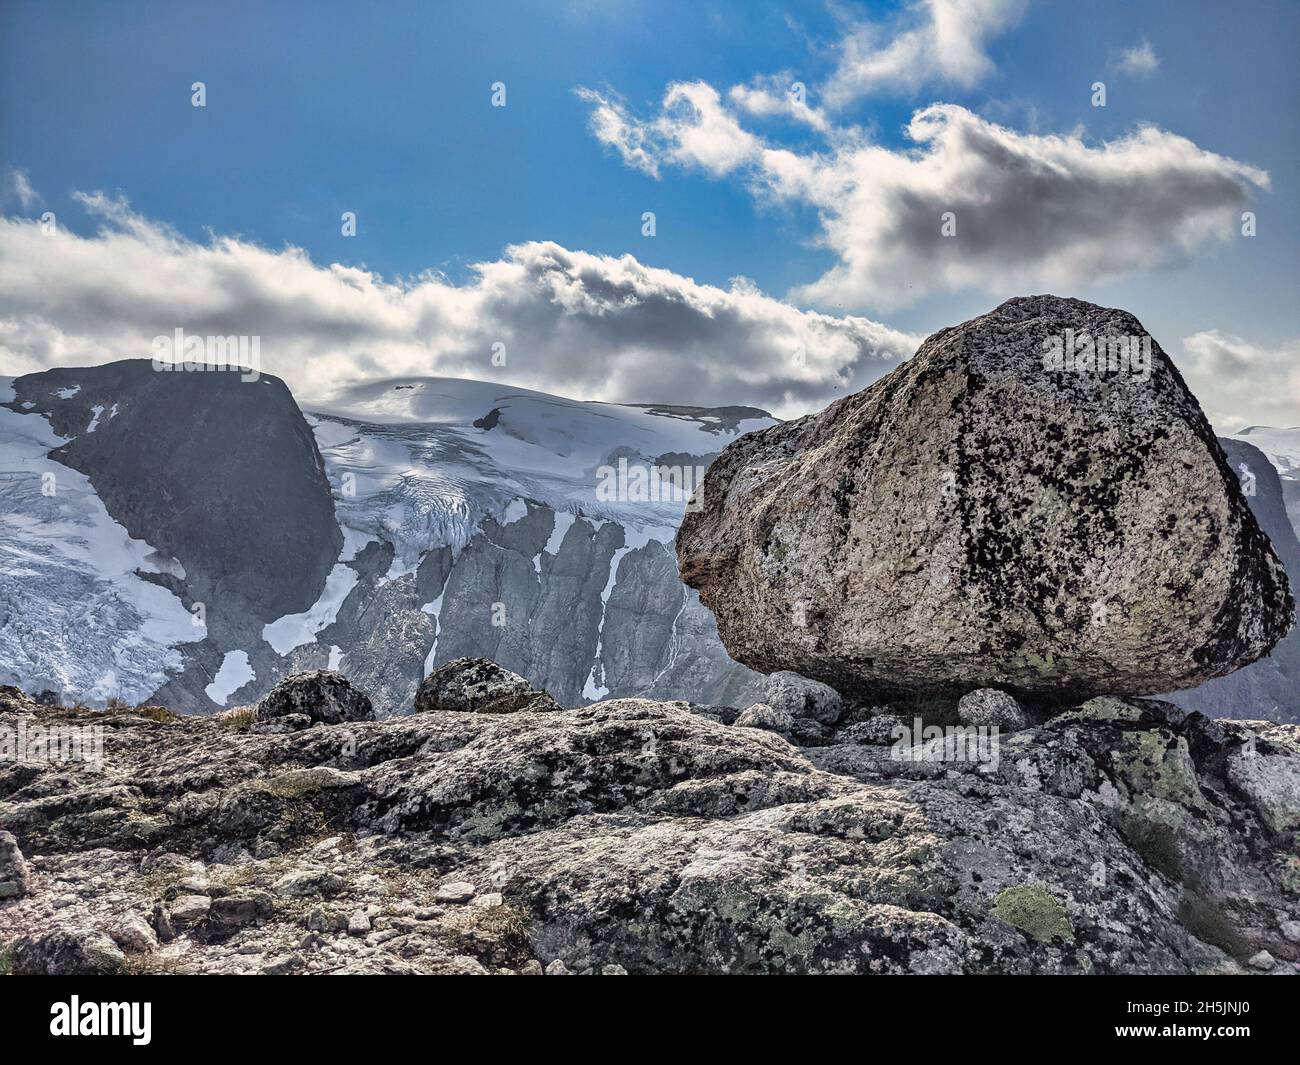 Wandern zwischen den großen Gletschern in norwegen. Jostedalsbreen Nationalpark, Kattanakkjen. Abenteuer. Reisen Sie in Skandinavien Stockfoto